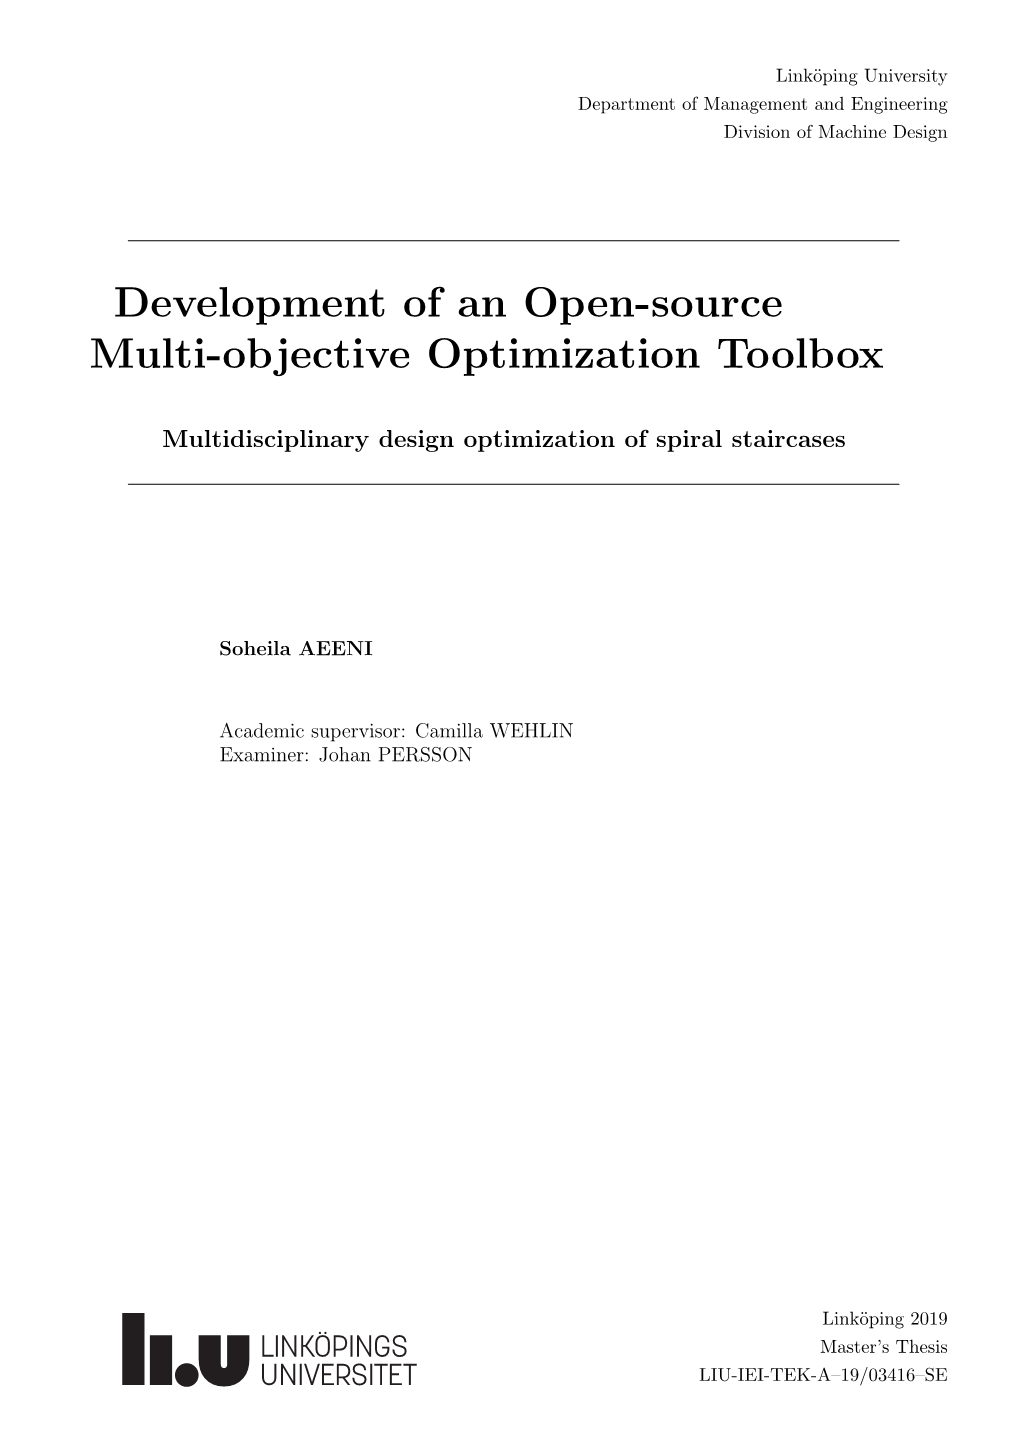 Development of an Open-Source Multi-Objective Optimization Toolbox